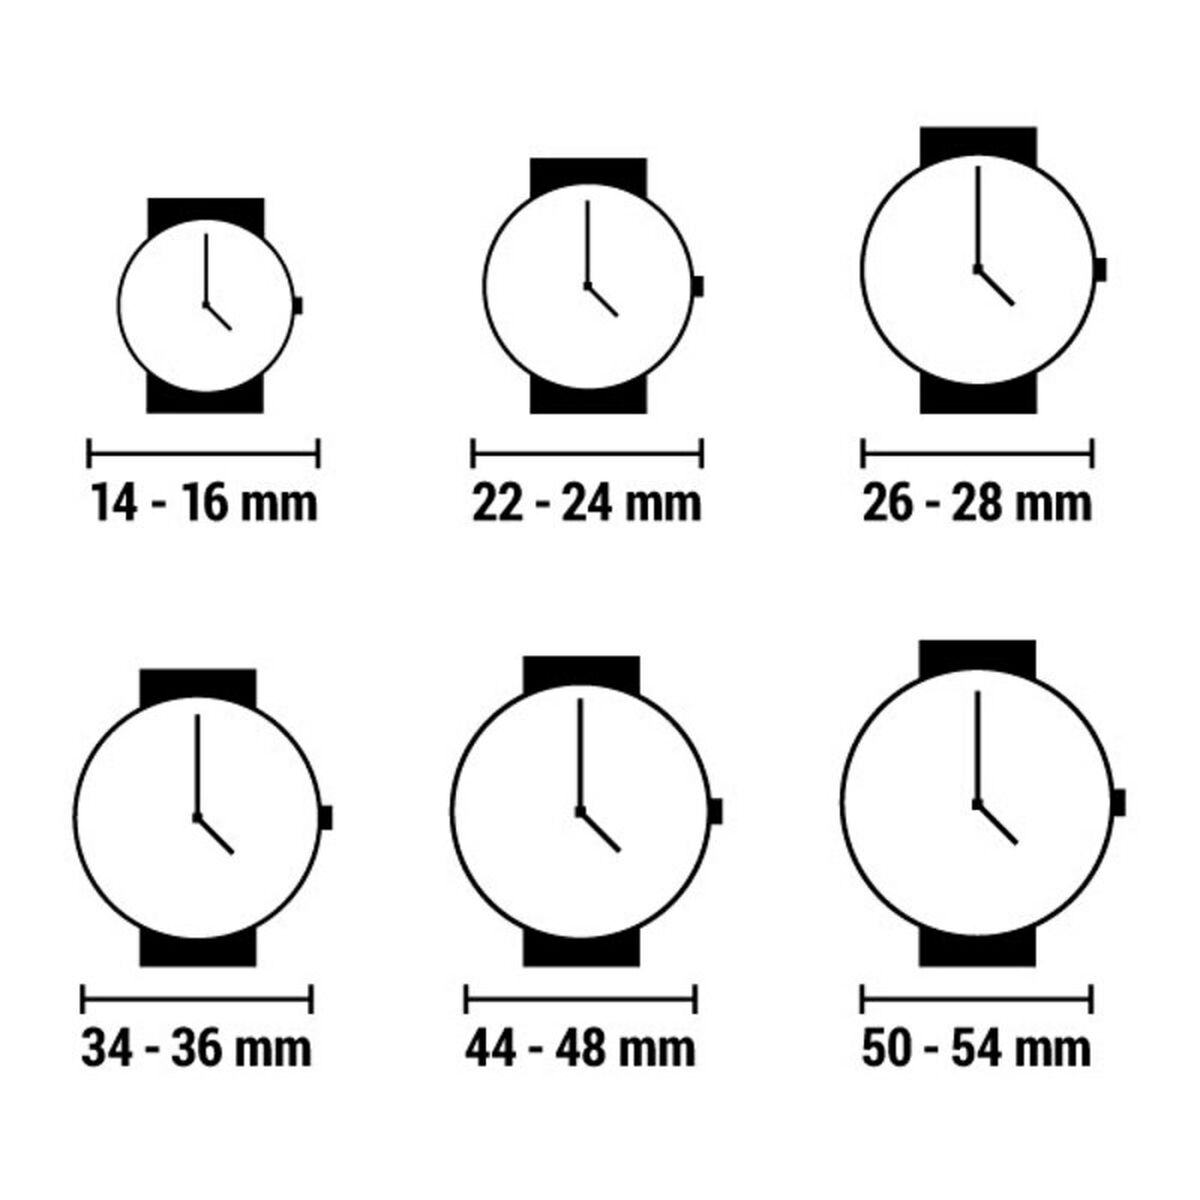 Reloj Hombre Guess W0658G3 (Ø 45 mm)